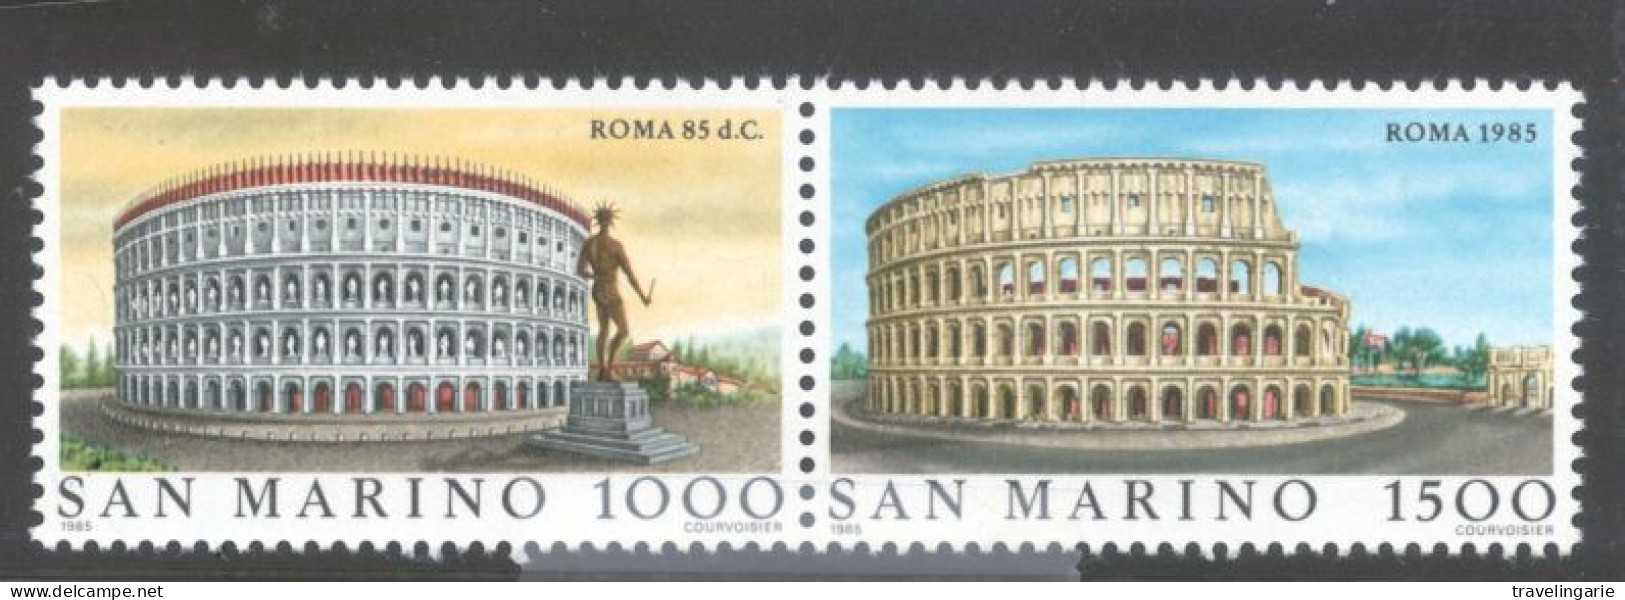 San Marino 1985 Famous Cities Roma MNH ** Se-tenant Pair - Monuments